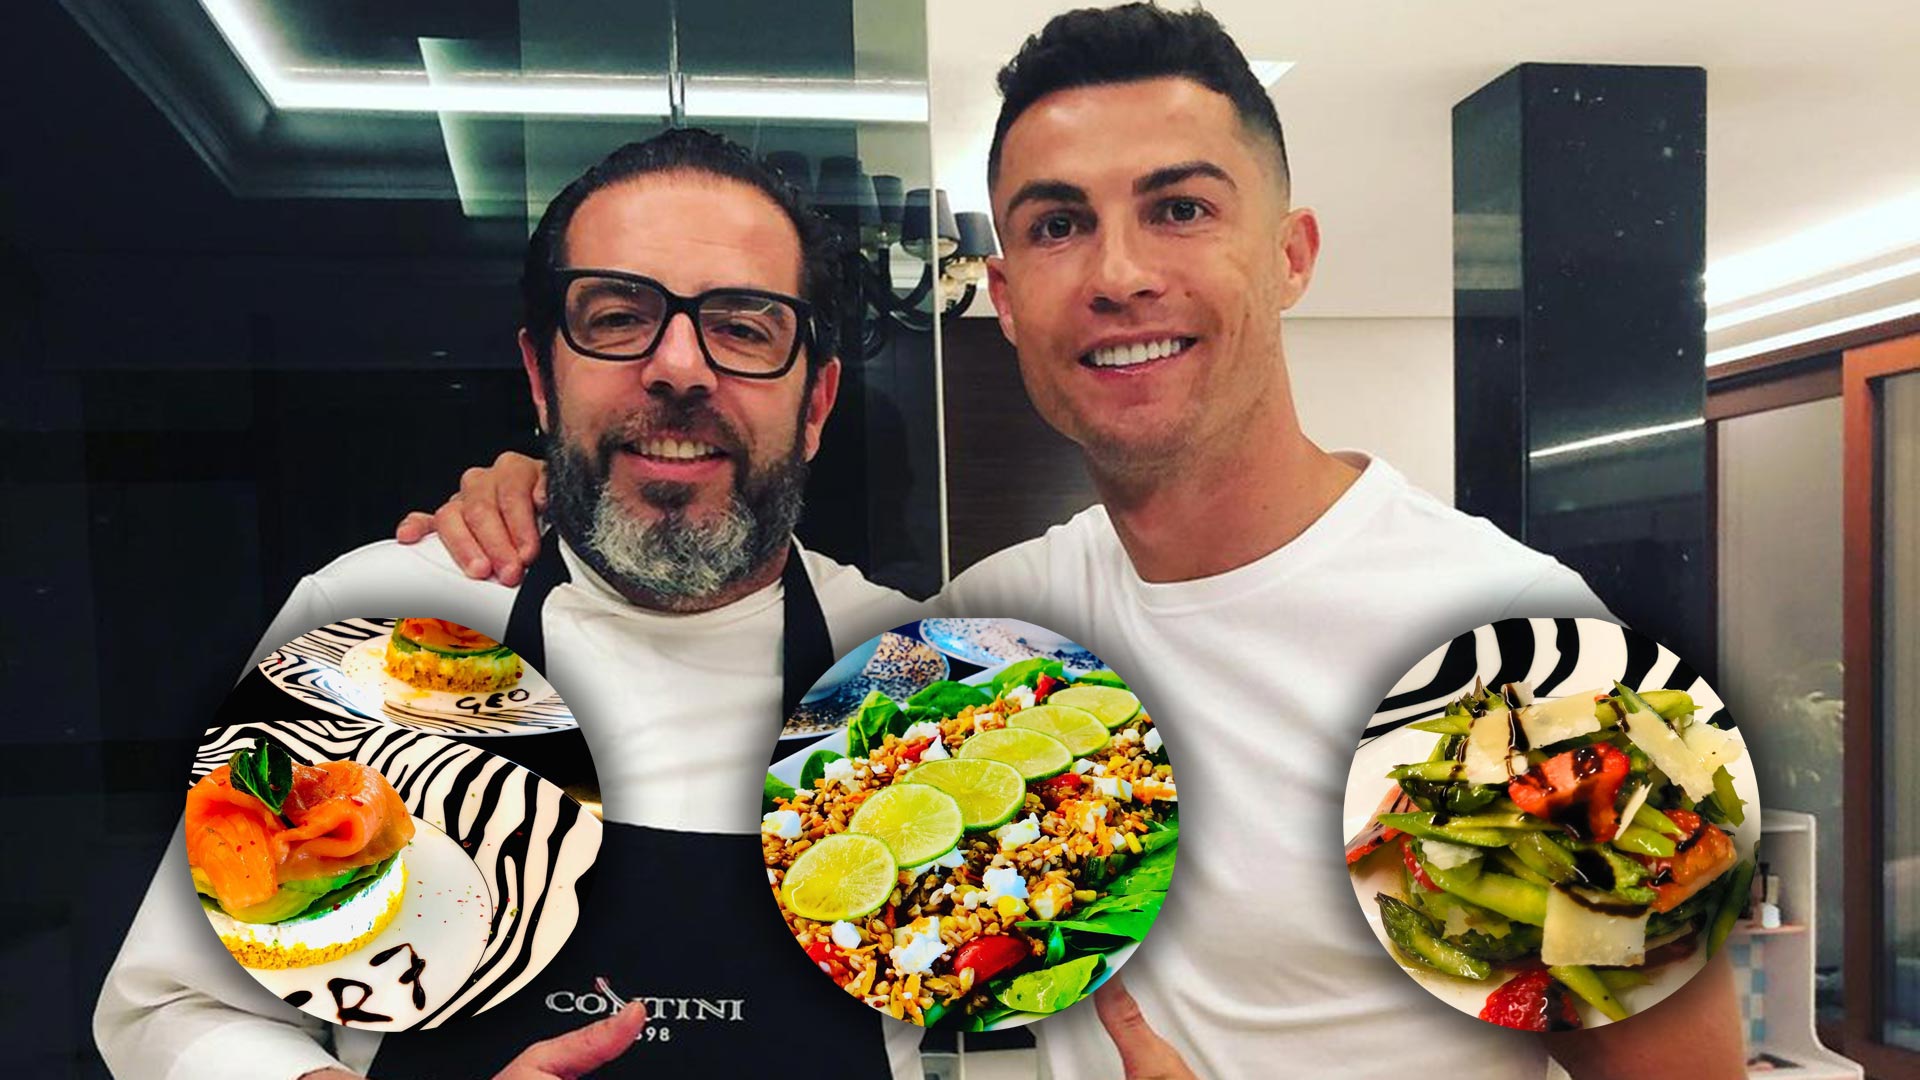 El mal momento que pasó una estrella brasileña tras probar la dieta de Cristiano Ronaldo: “Pensé que me iba a morir”